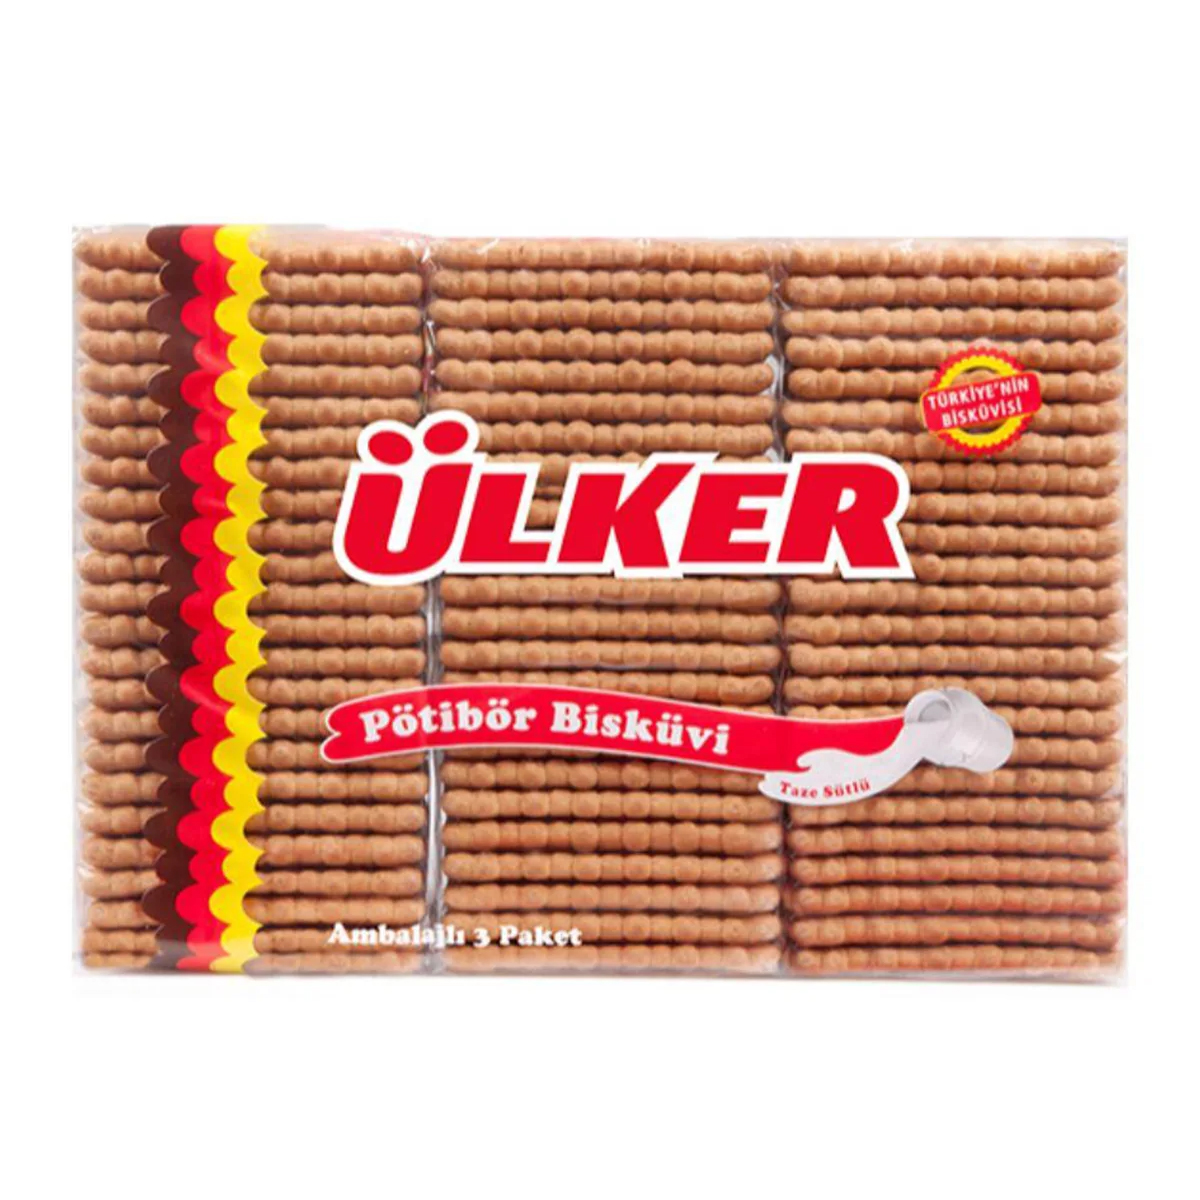 Печенье Ulker Petit Beurre двойной обжарки, 450 г печенье ulker petit beurre двойной обжарки 450 г